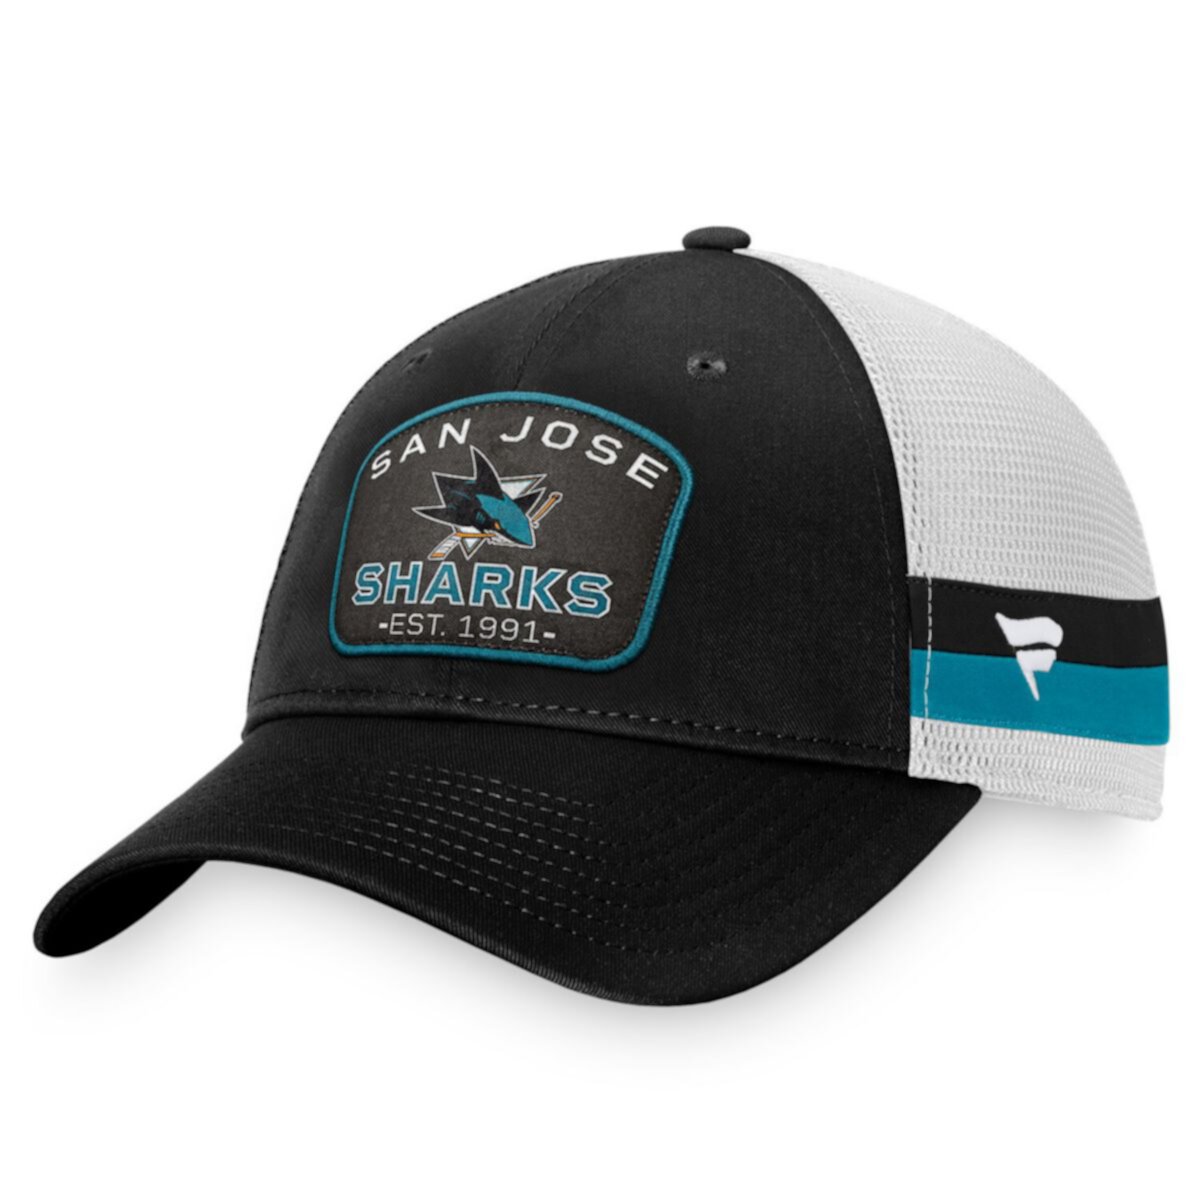 Men's Fanatics Branded Black/White San Jose Sharks Fundamental Striped Trucker Adjustable Hat Fanatics